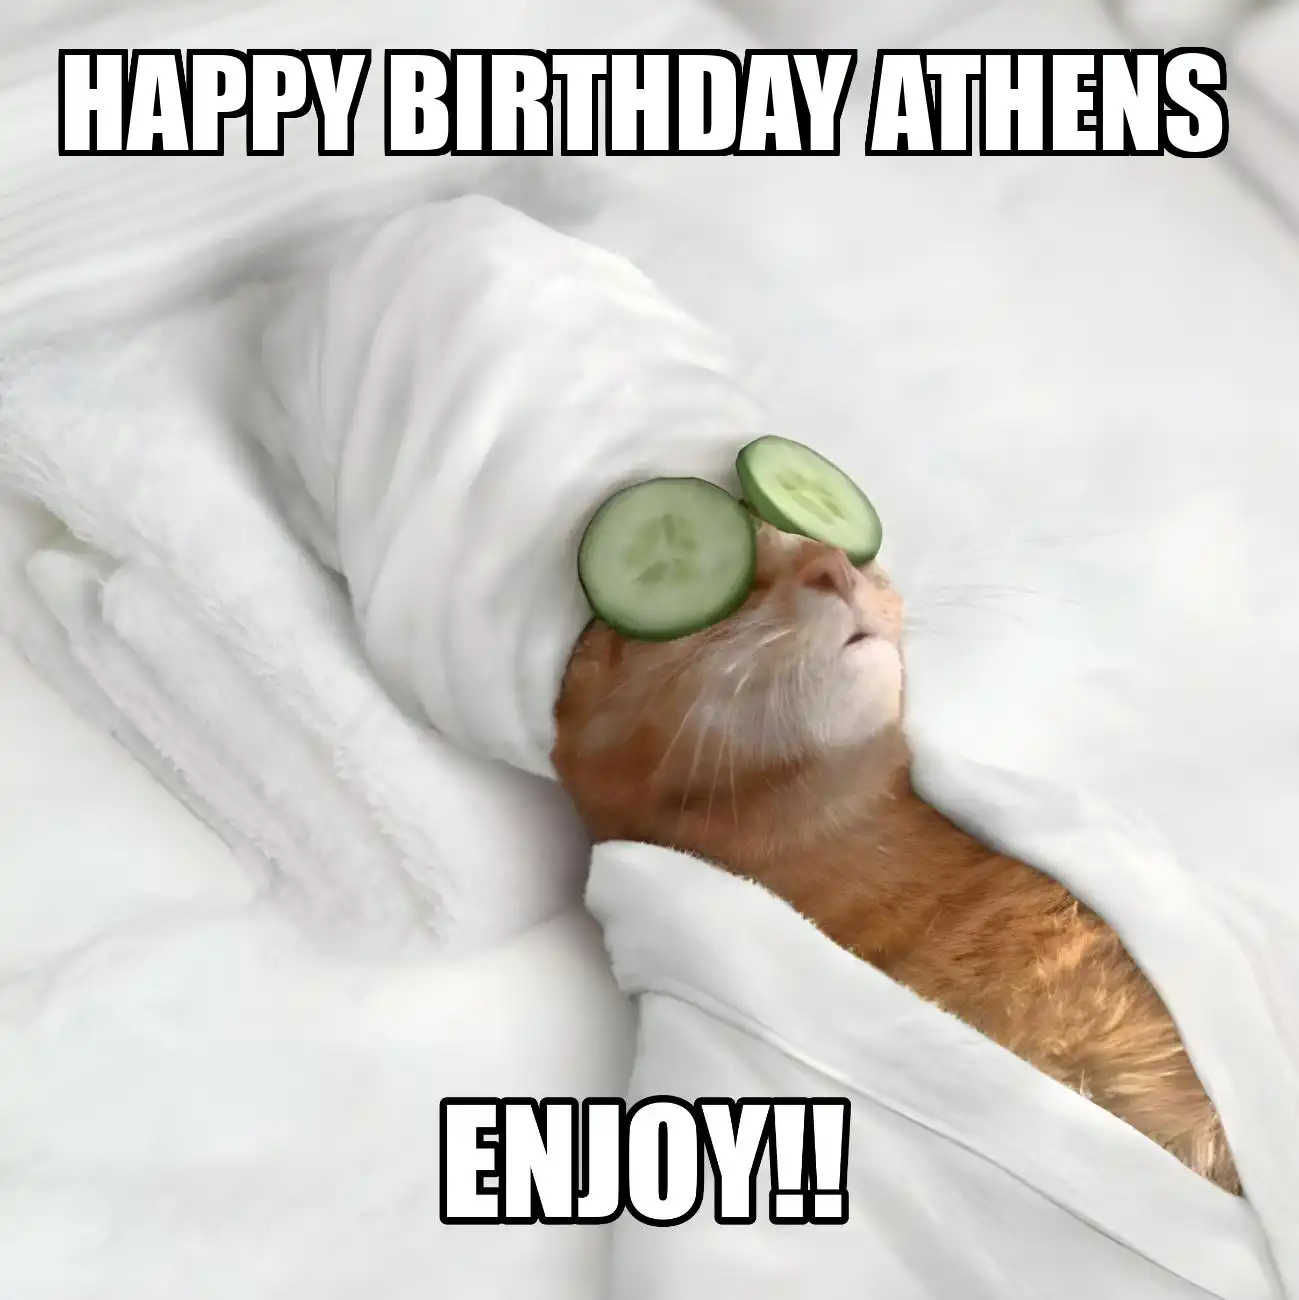 Happy Birthday Athens Enjoy Cat Meme